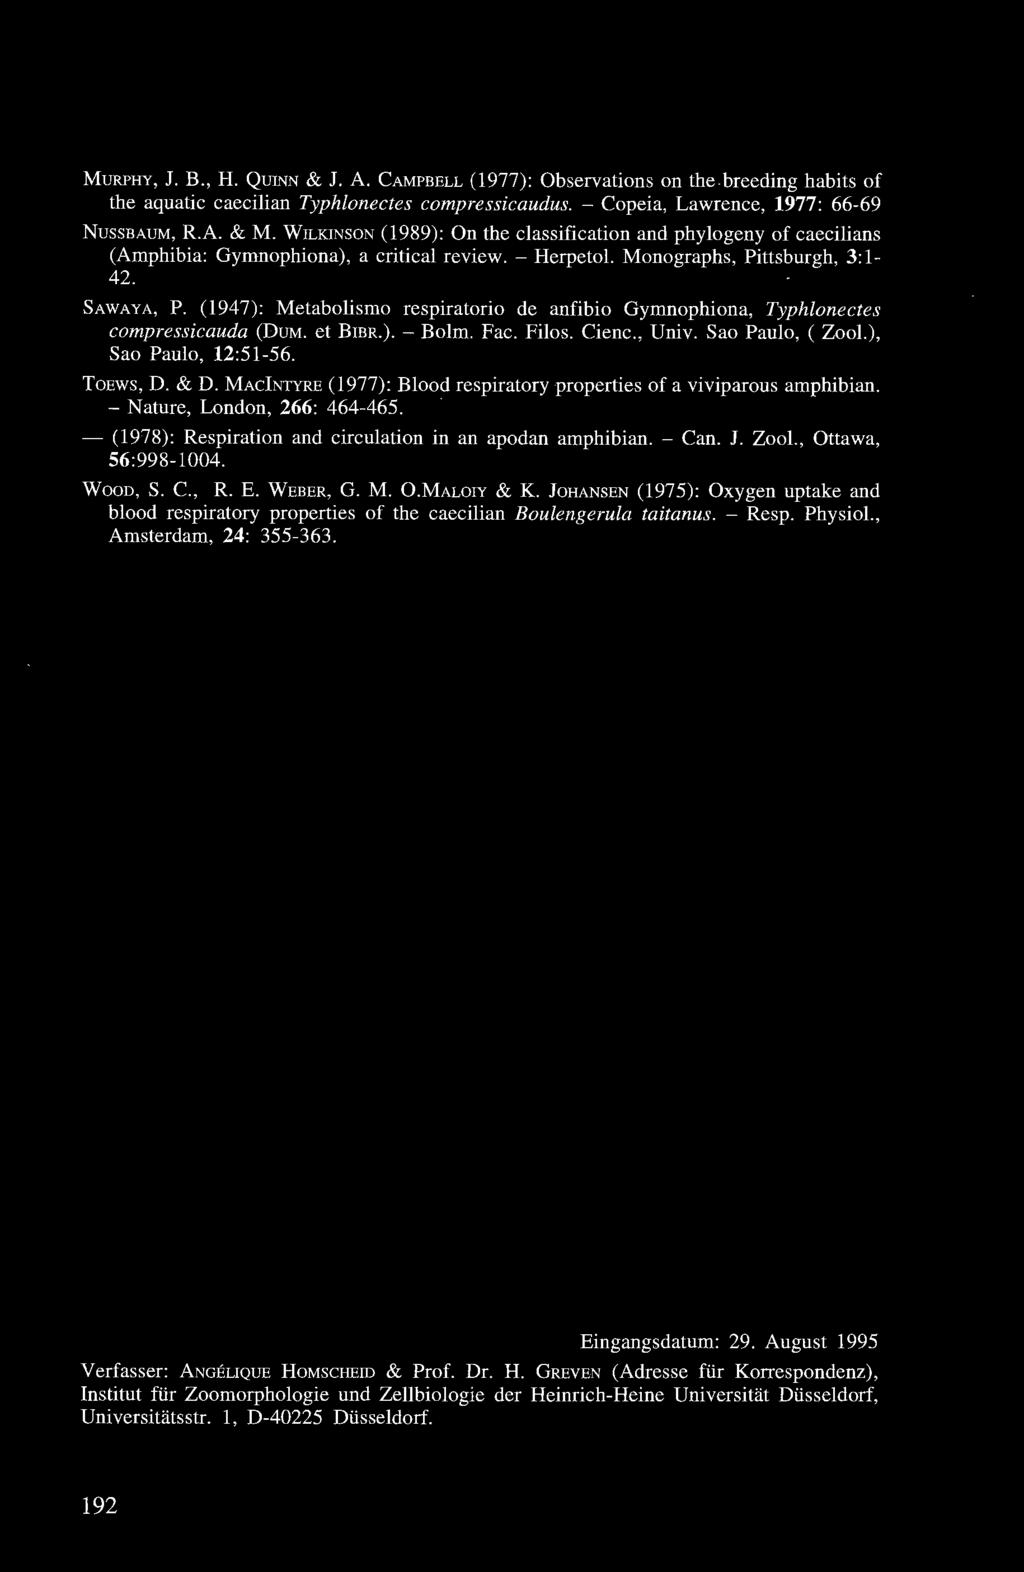 (1947): Metabolismo respiratorio de anfibio Gymnophiona, Typhlonectes compressicauda (DuM. et BrnR.). - Bolm. Fac. Filos. Cienc., Univ. Sao Paulo, ( Zoo!.), Sao Paulo, 12:51-56. ToEws, D. & D.